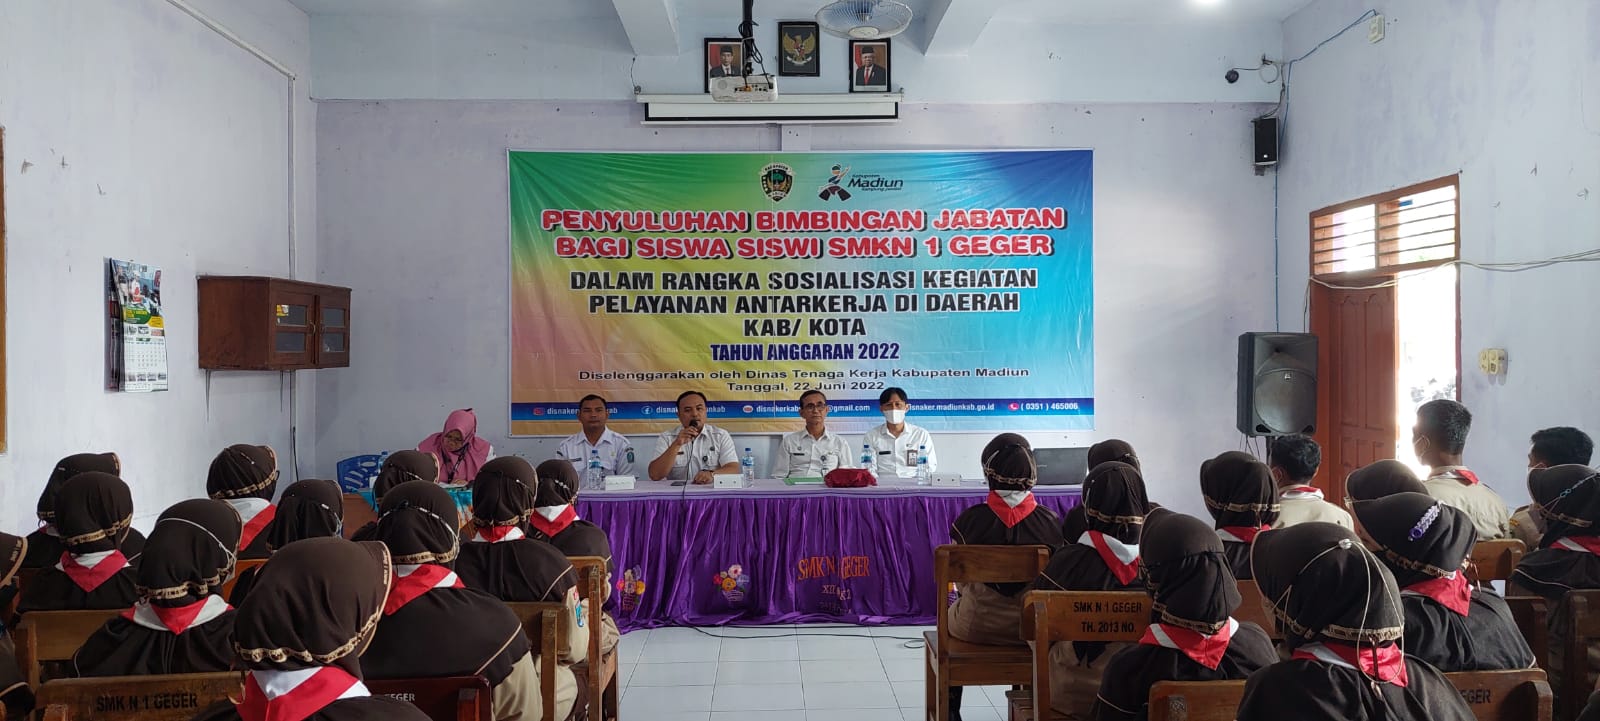 Siswa-Siswi SMKN 1 Geger Mendapatkan Penyuluhan Bimbingan Jabatan Dari Disnaker Kabupaten Madiun